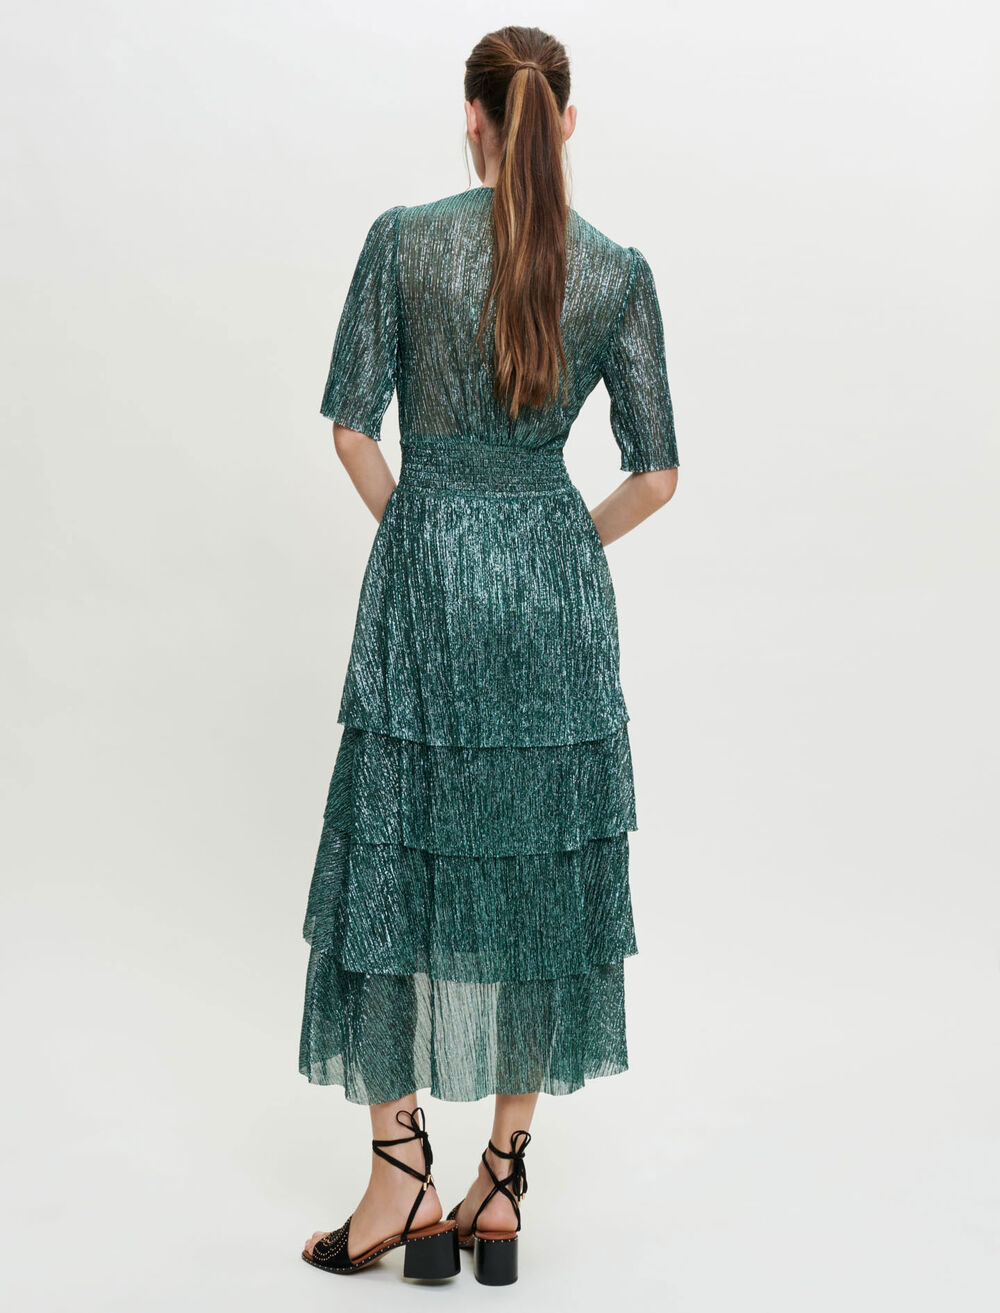 120RUFFINE Stretch lurex fabric dress with ruffles - Dresses - Maje.com